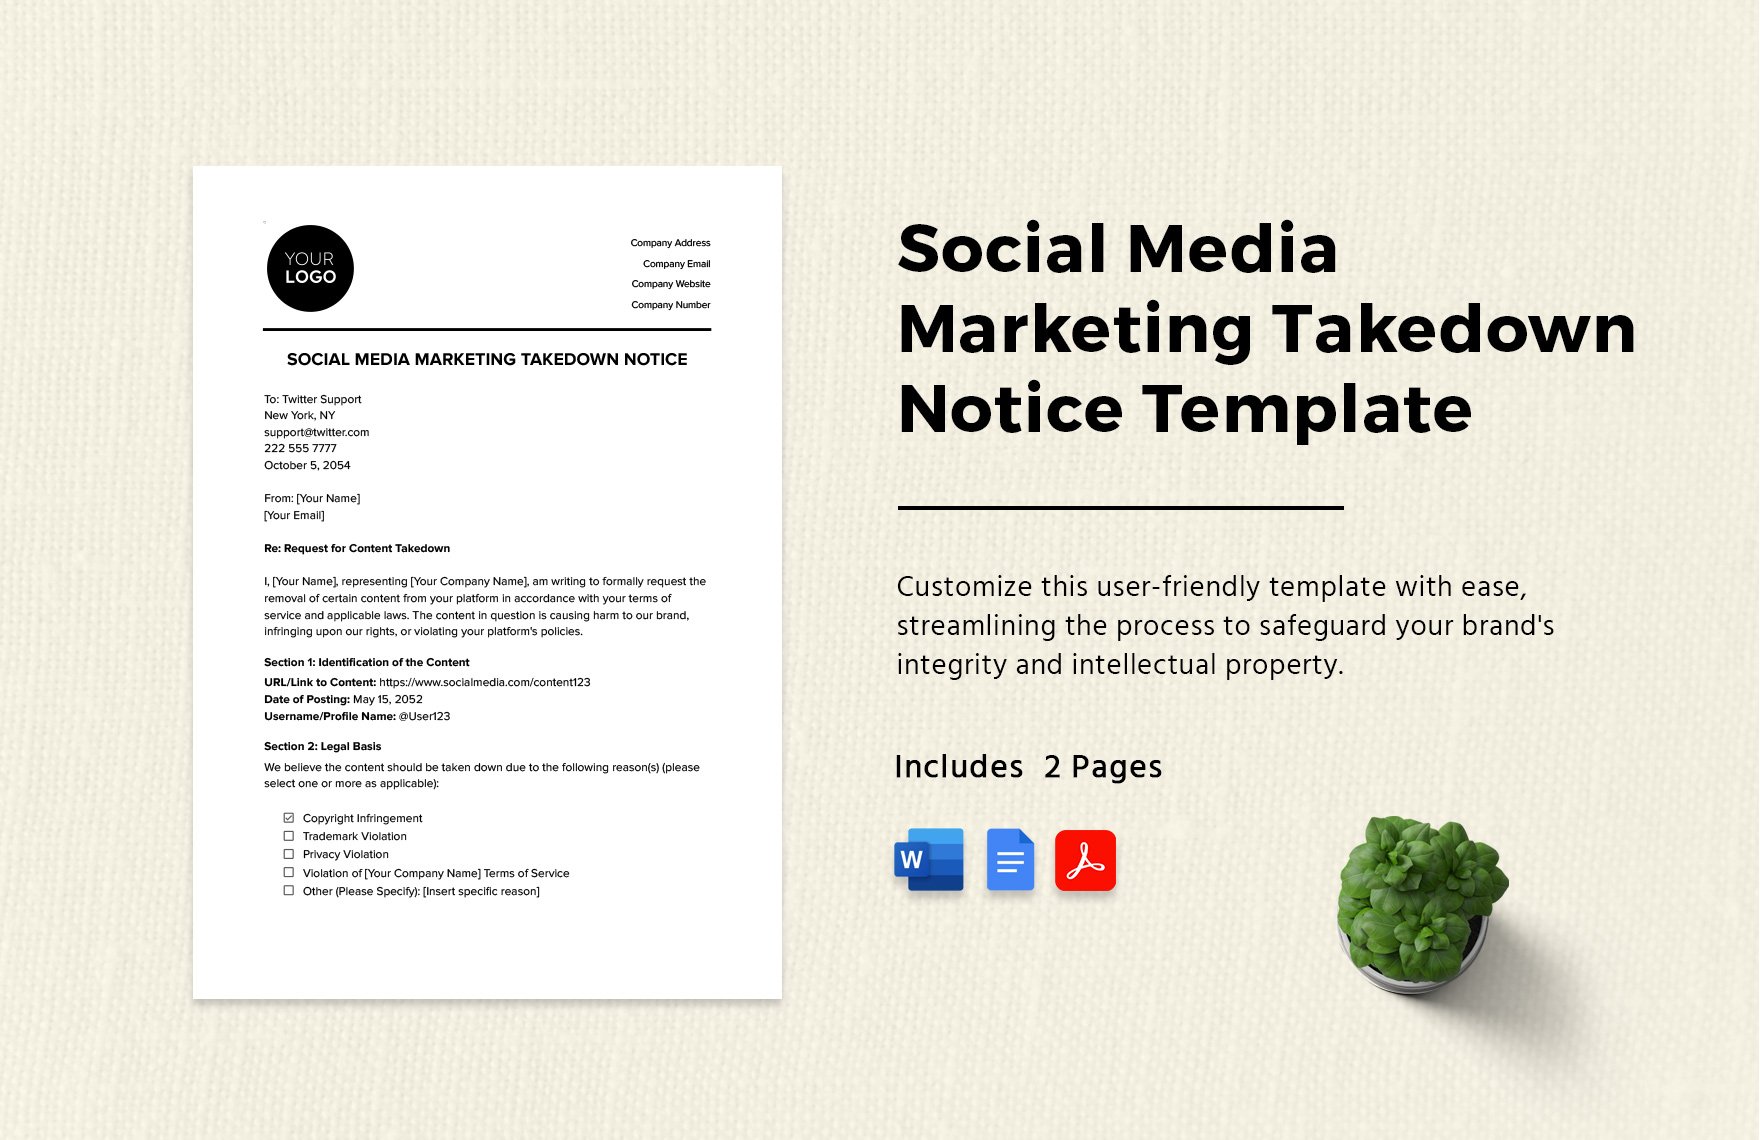 Social Media Marketing Takedown Notice Template in Word, Google Docs, PDF